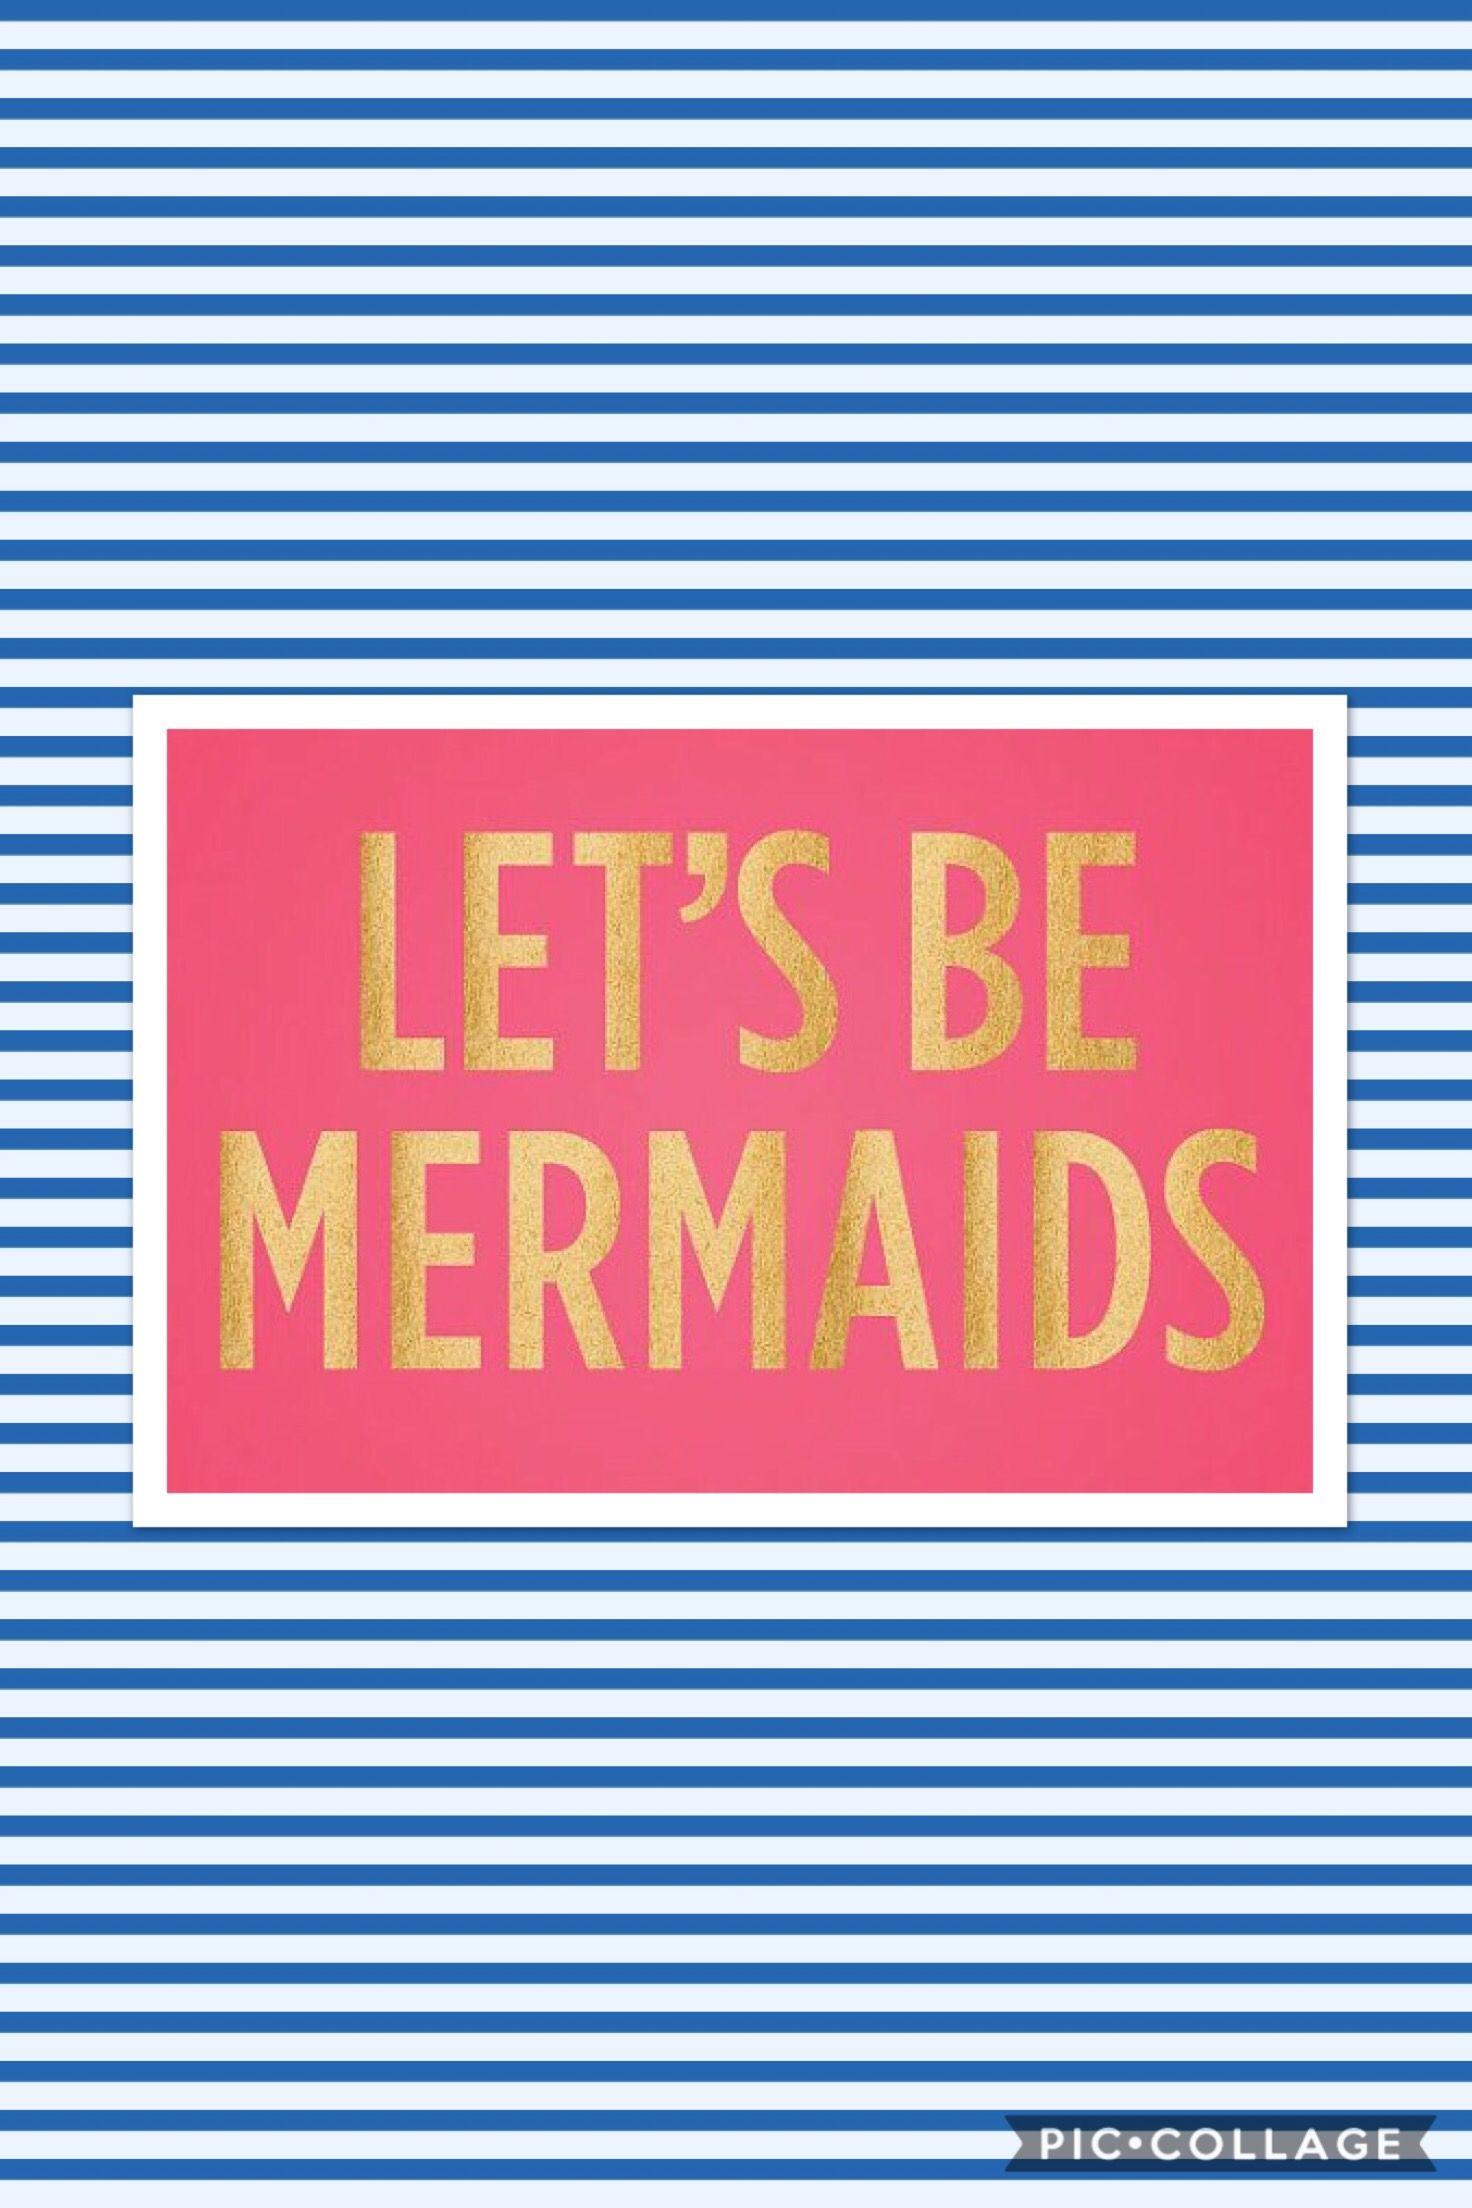 IPhone 6s and 7 Mermaids Wallpaper. All Aboard!!. Mermaid